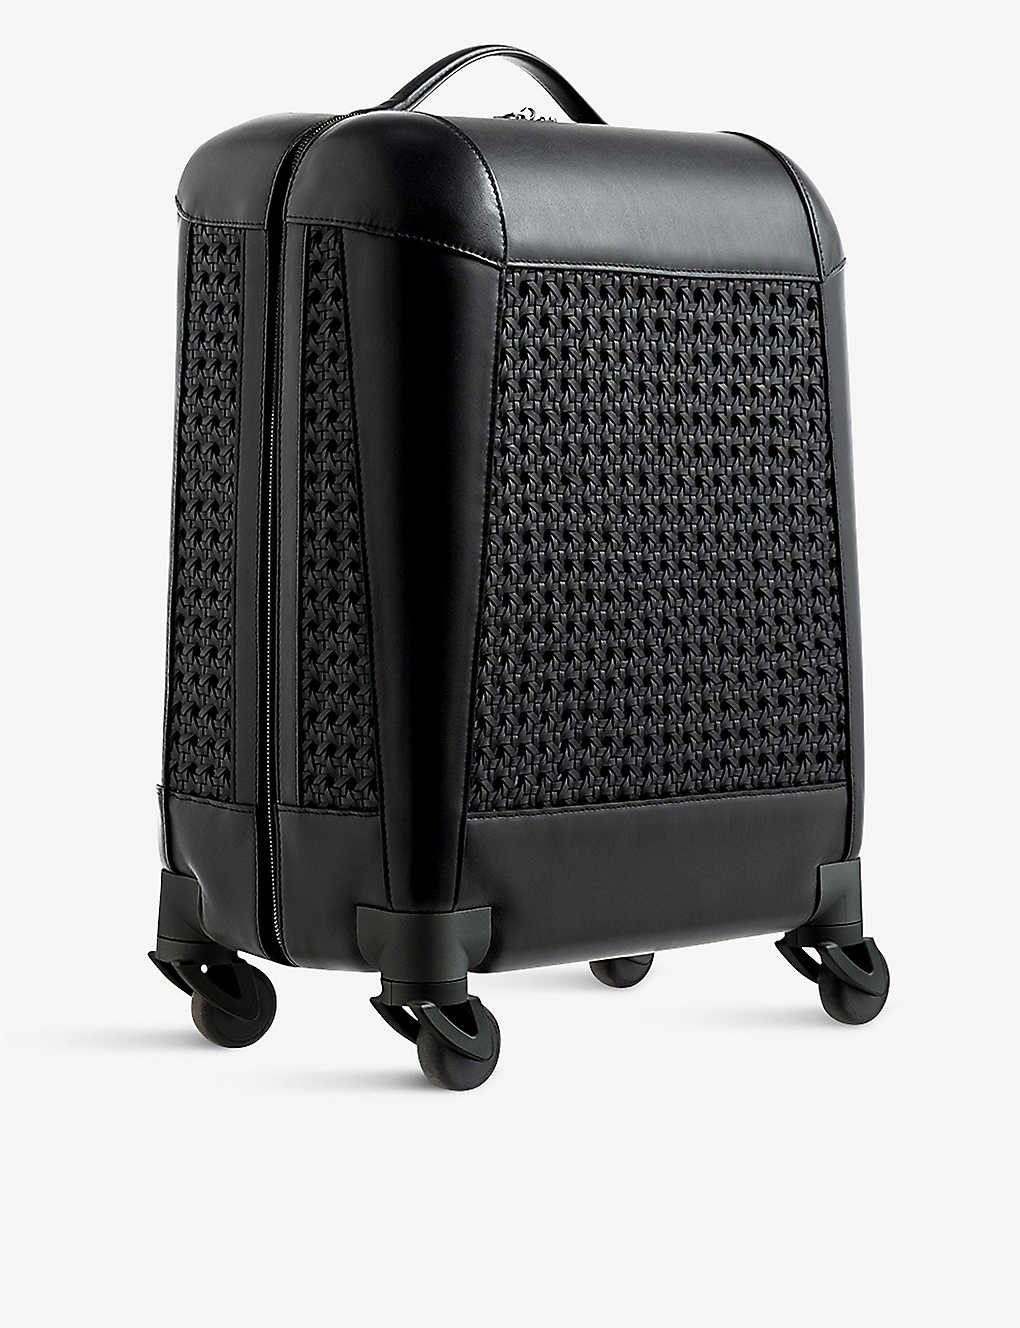 Aviteur Black Carry-on Leather Suitcase 52cm